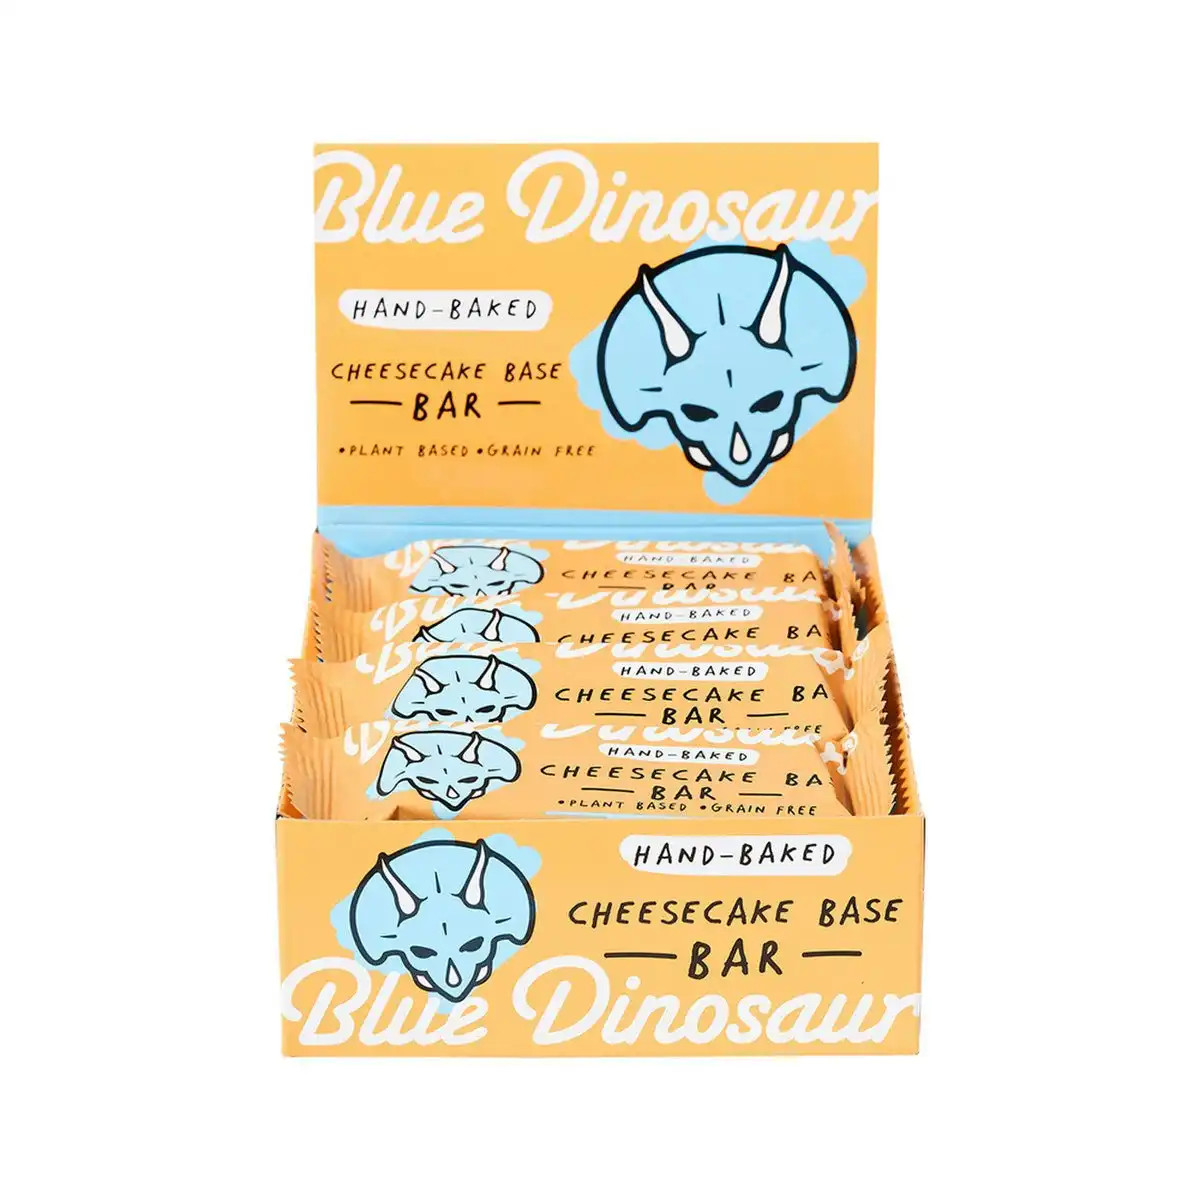 Blue Dinosaur Hand-baked Bar Cheesecake Base 45g 12 Pack